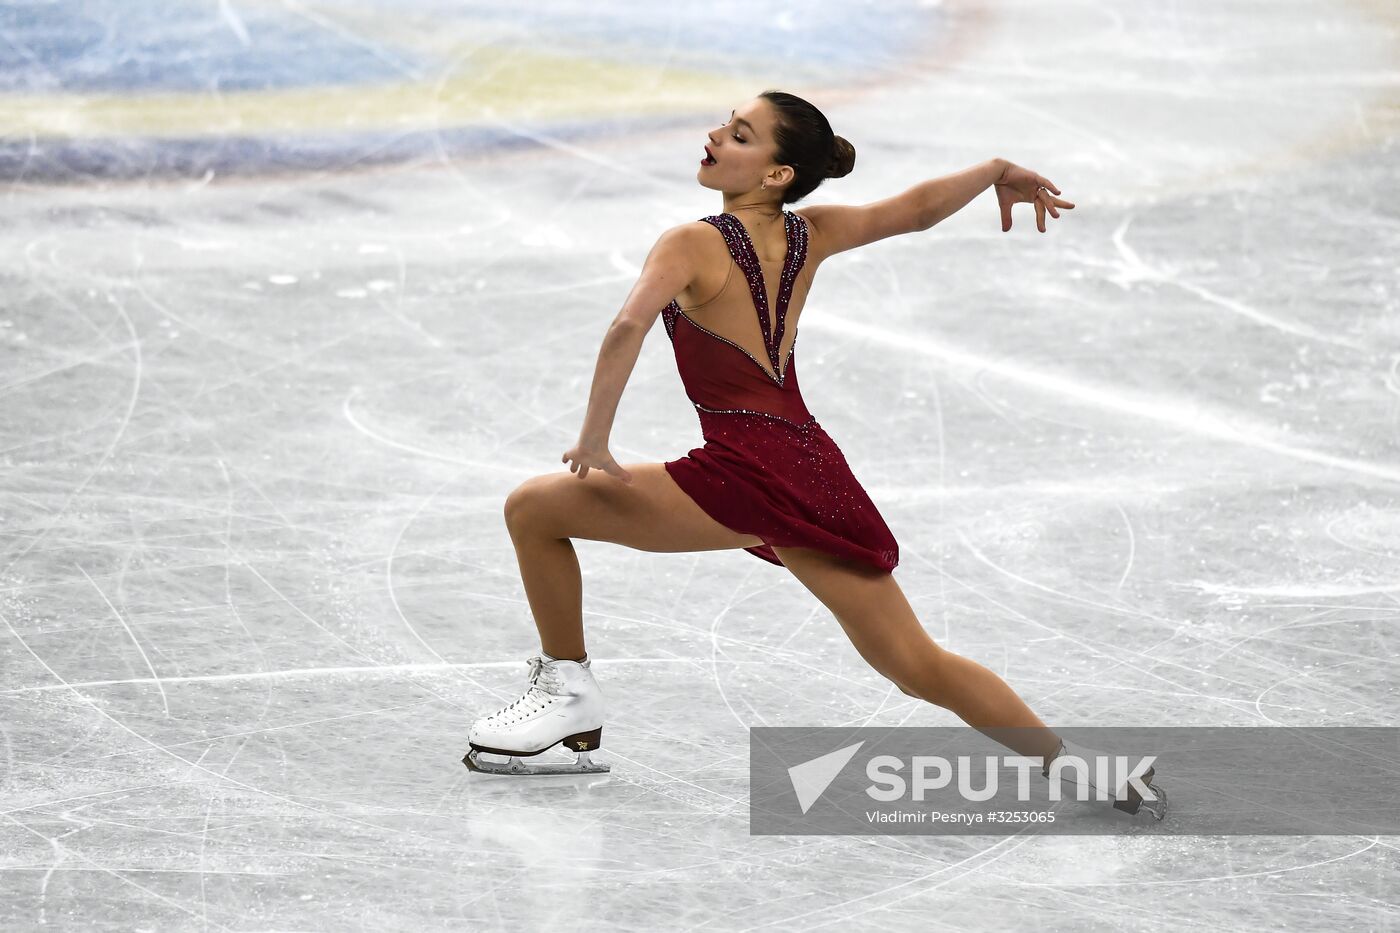 ISU Junior Grand Prix of Figure Skating Final. Women's free skating